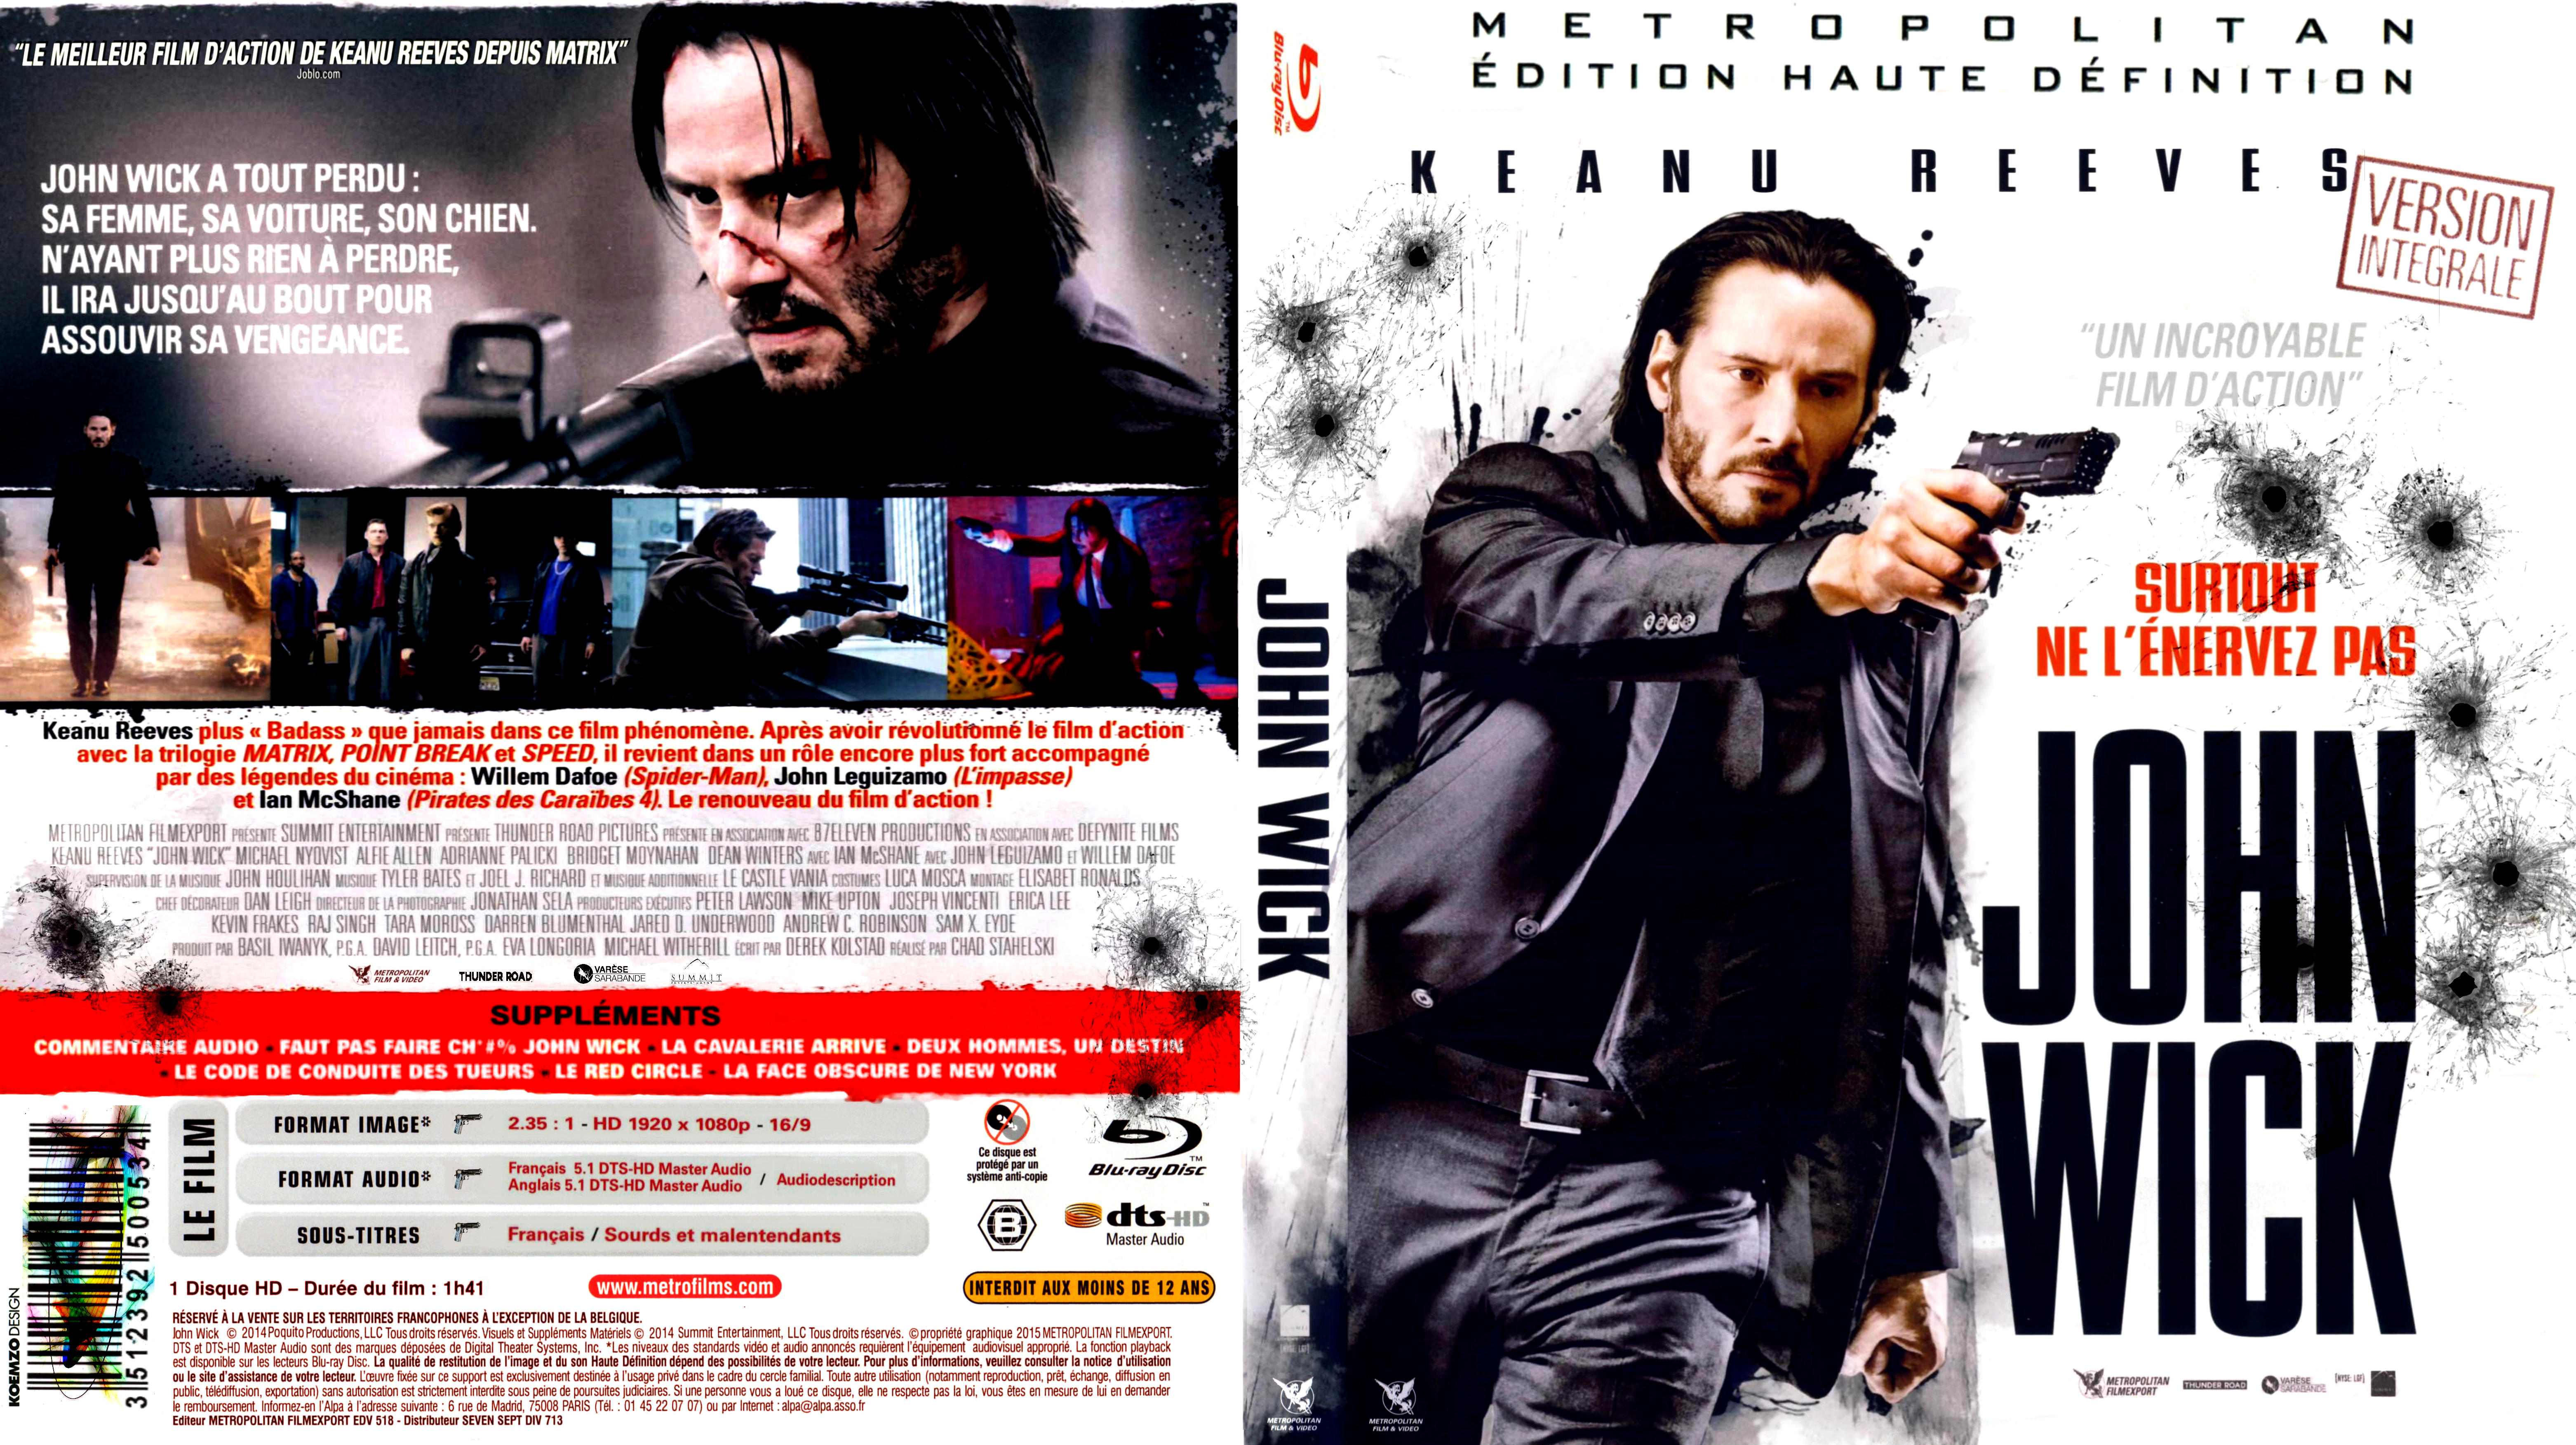 Jaquette DVD John Wick custom (BLU-RAY)